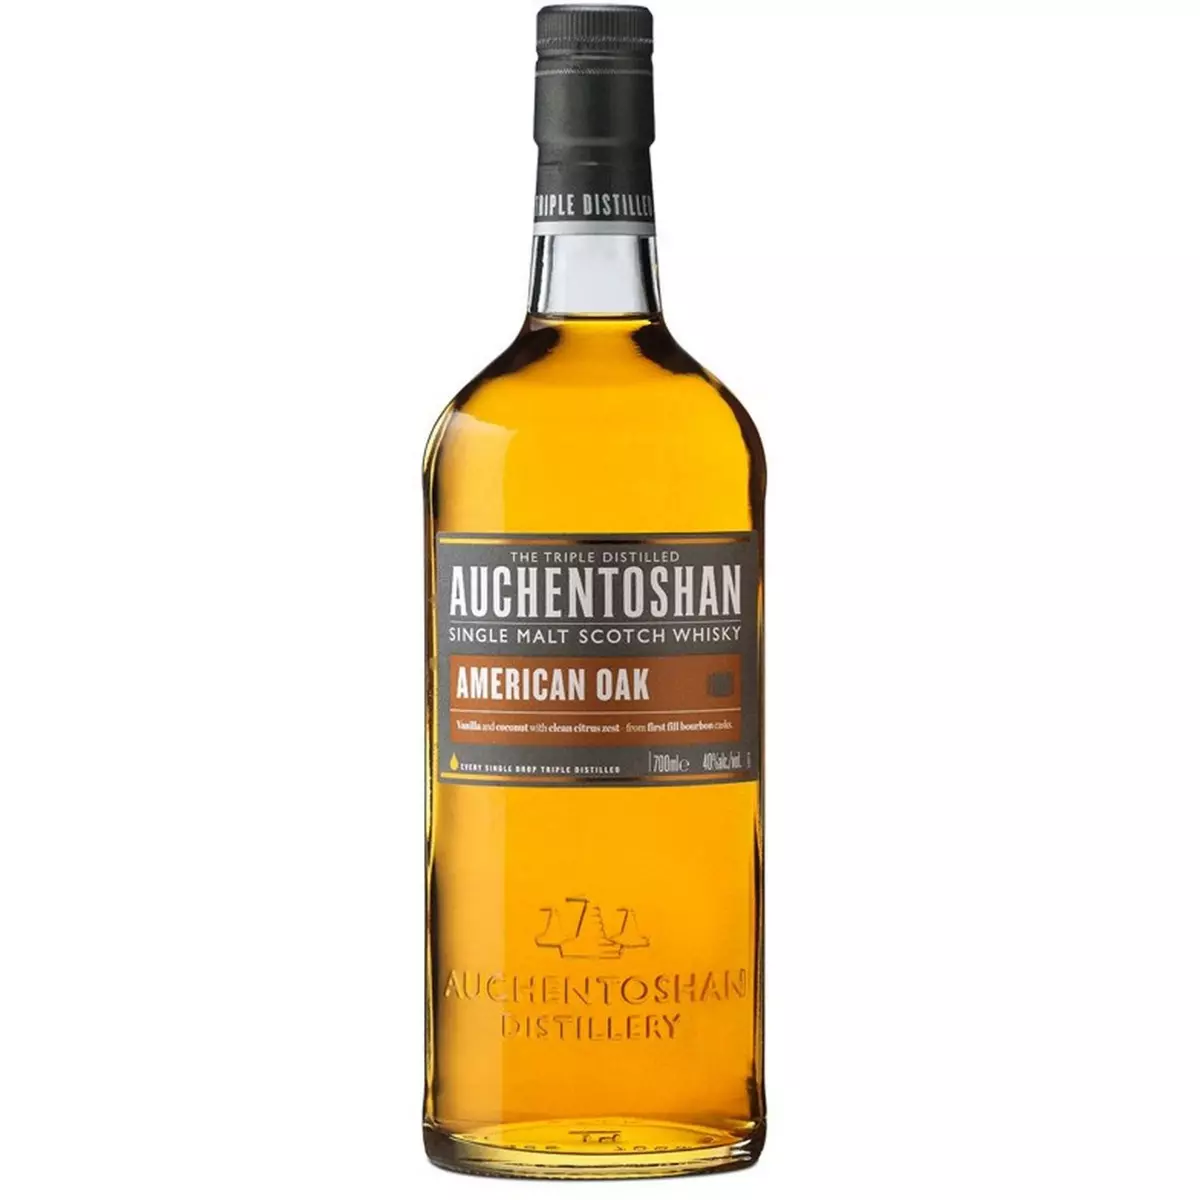 AUCHENSTOSHAN Scotch whisky single malt american oak 40% 70cl